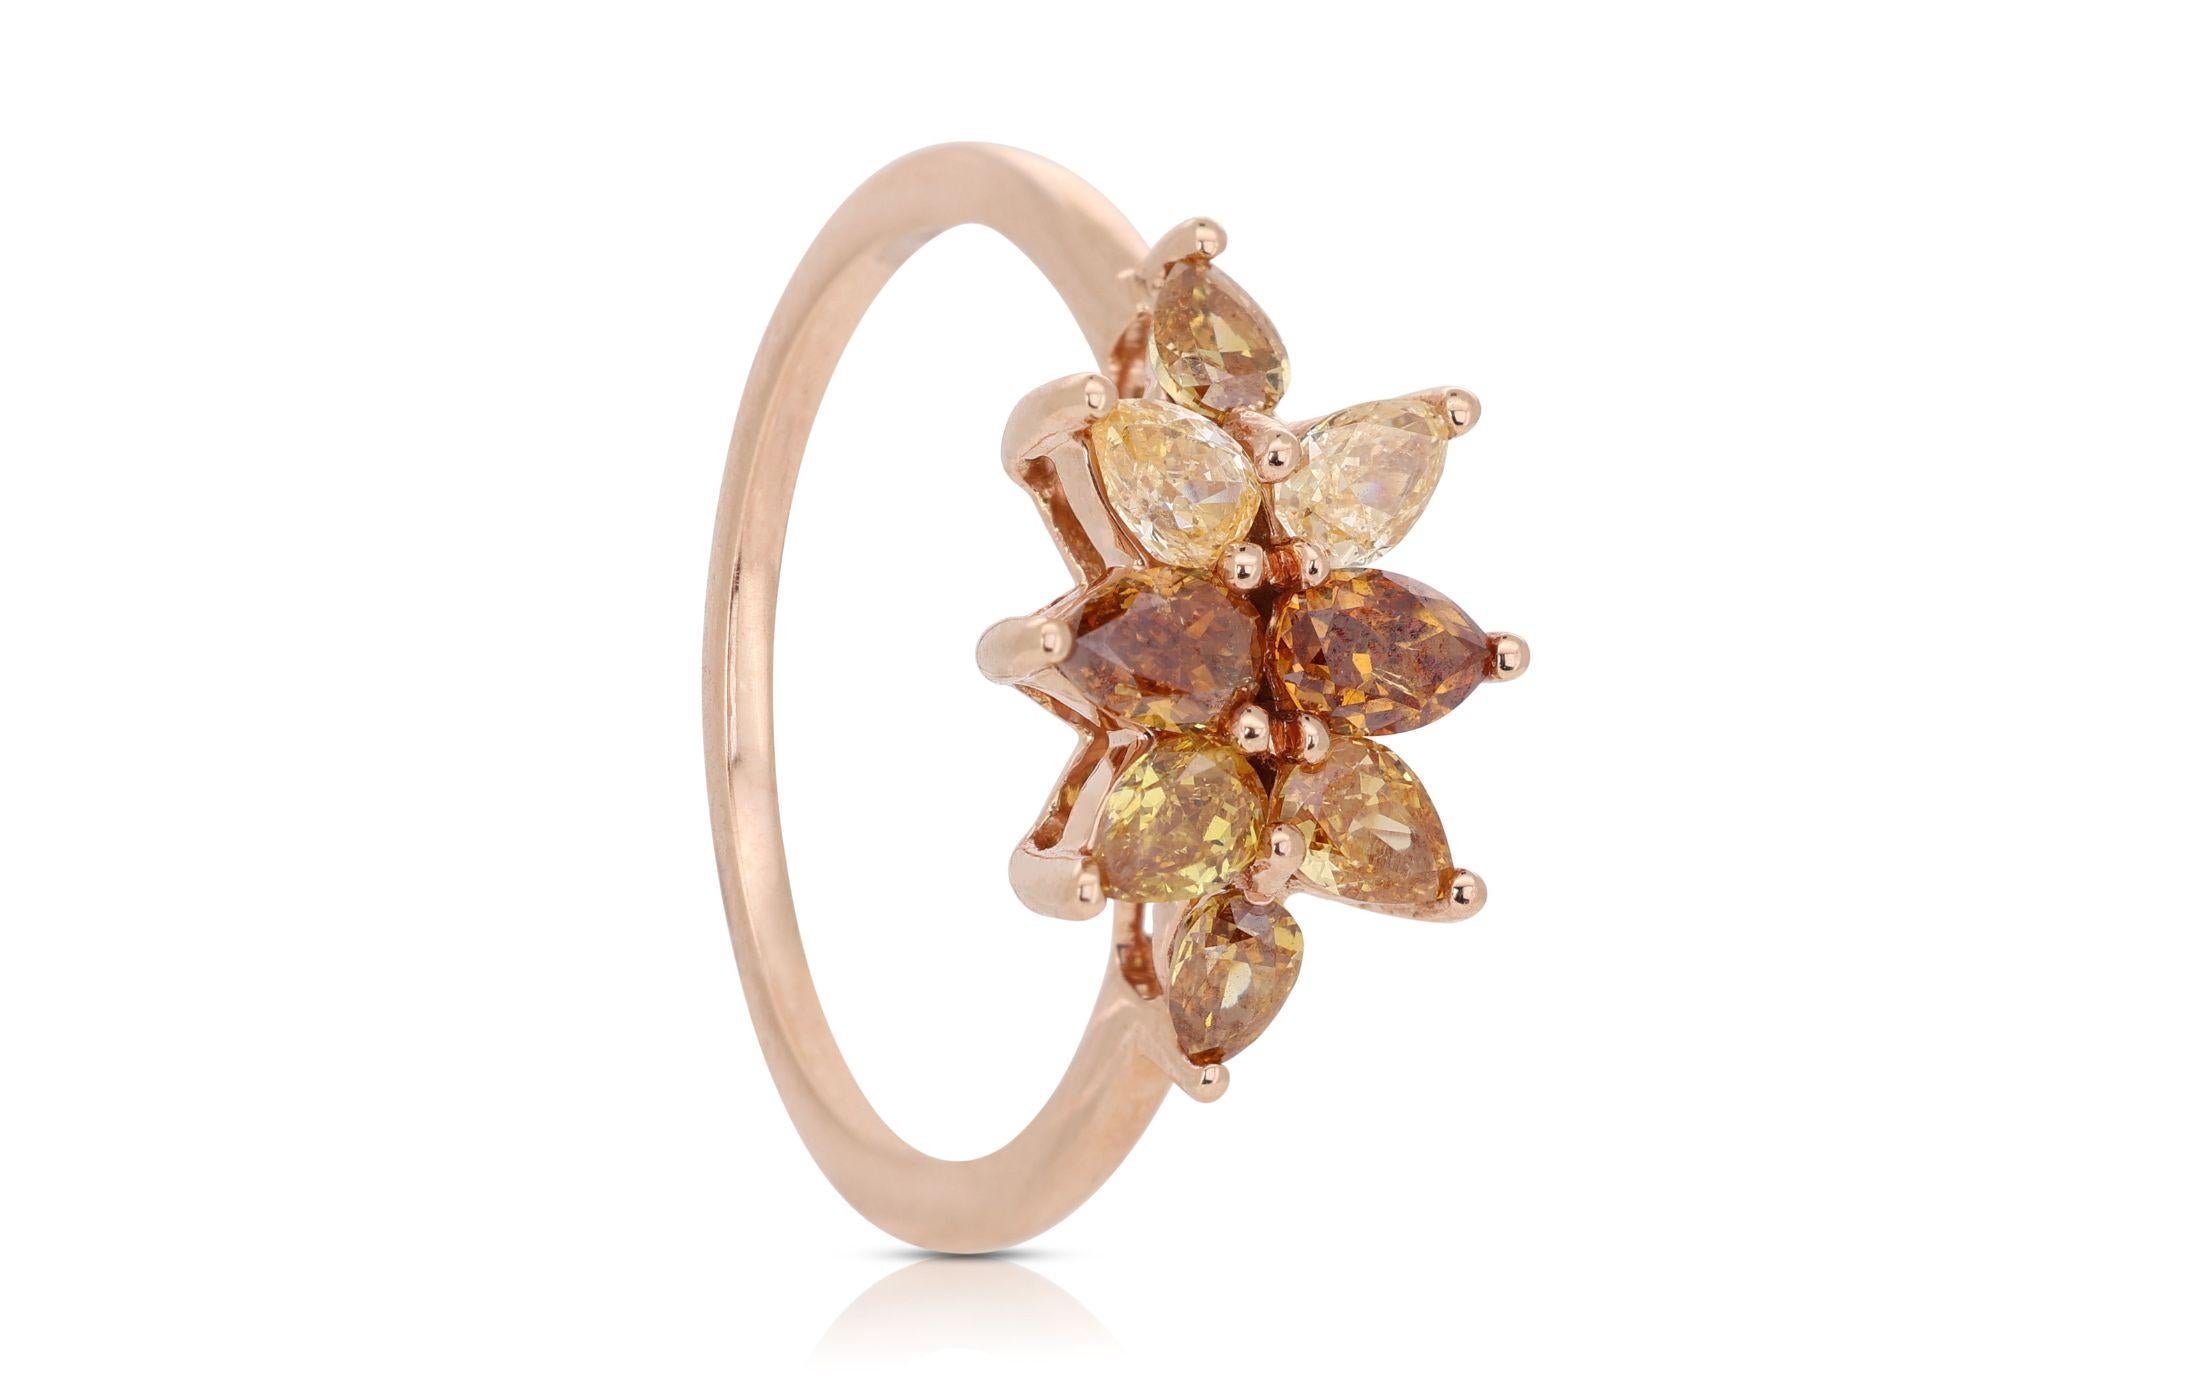 Gorgeous 1.02ct Flower-designed Diamond Ring in 14K Rose Gold For Sale 3